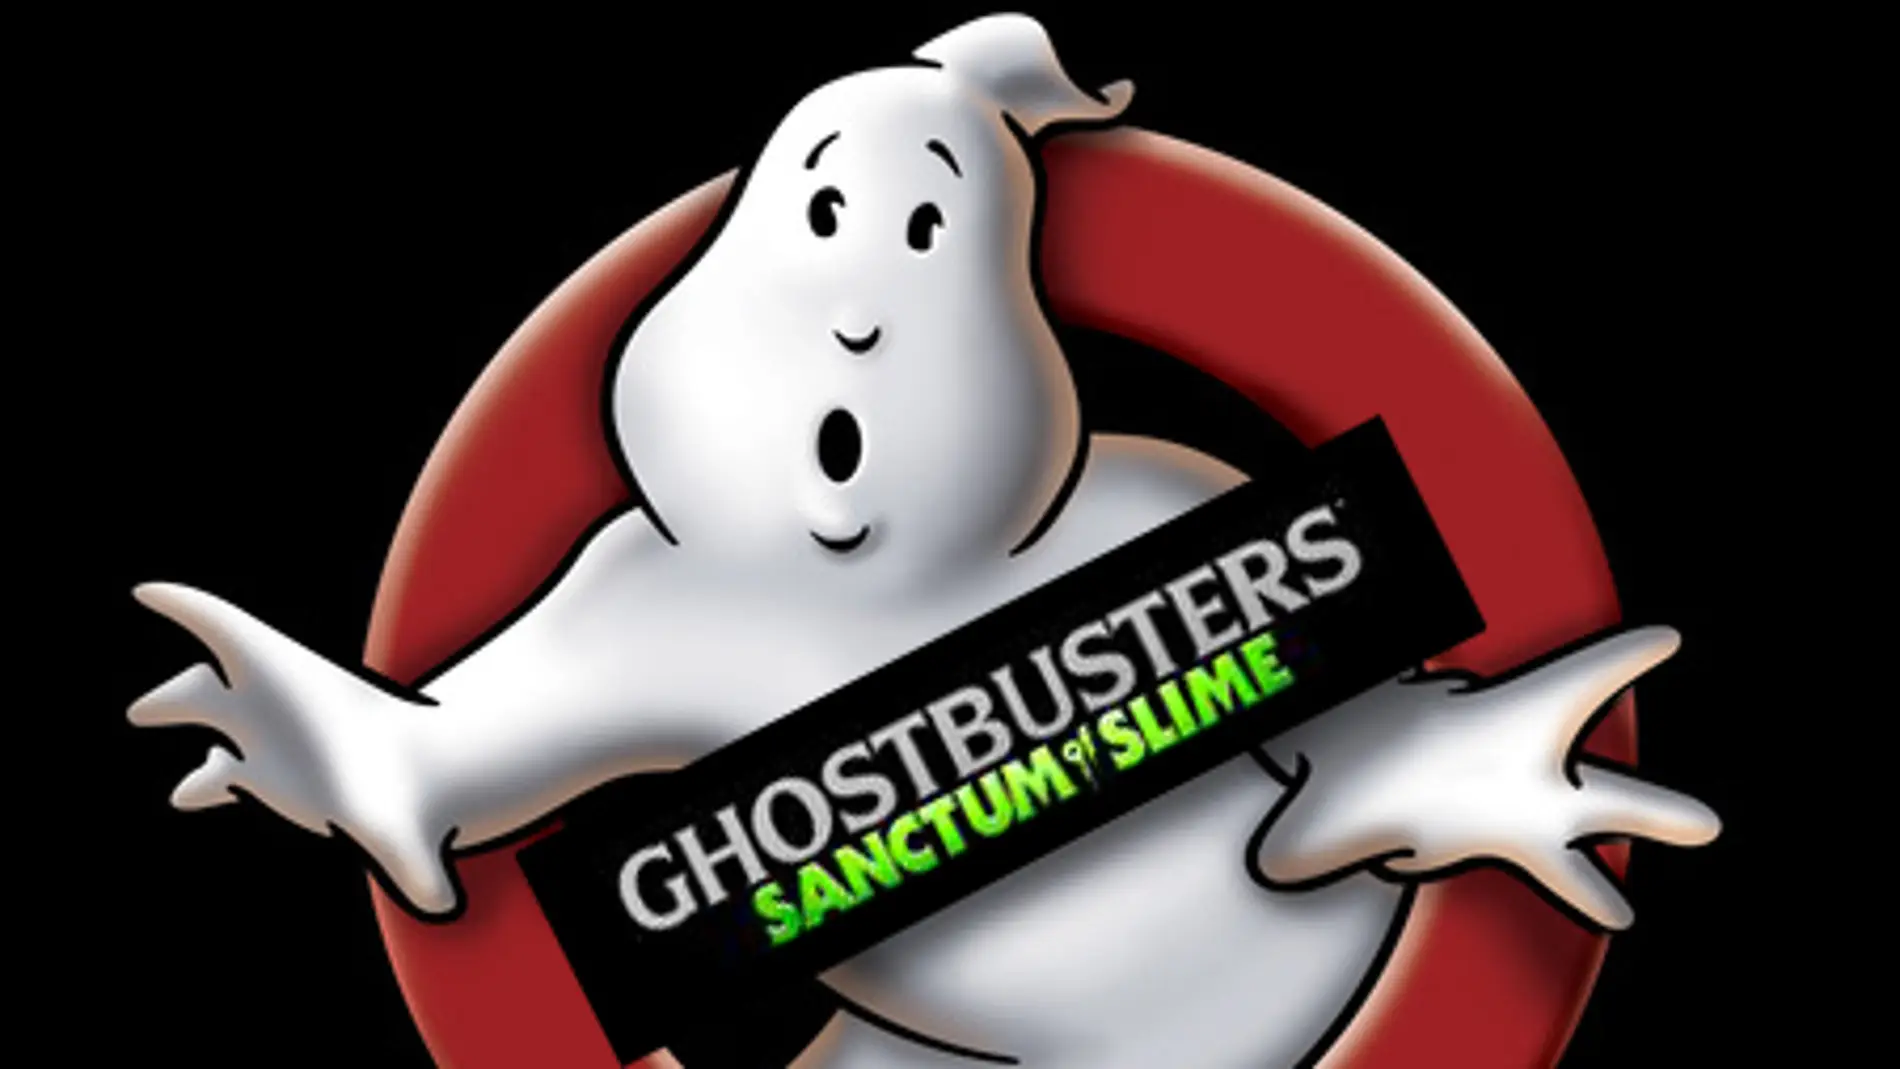 Ghostbusters Sactum of Slime